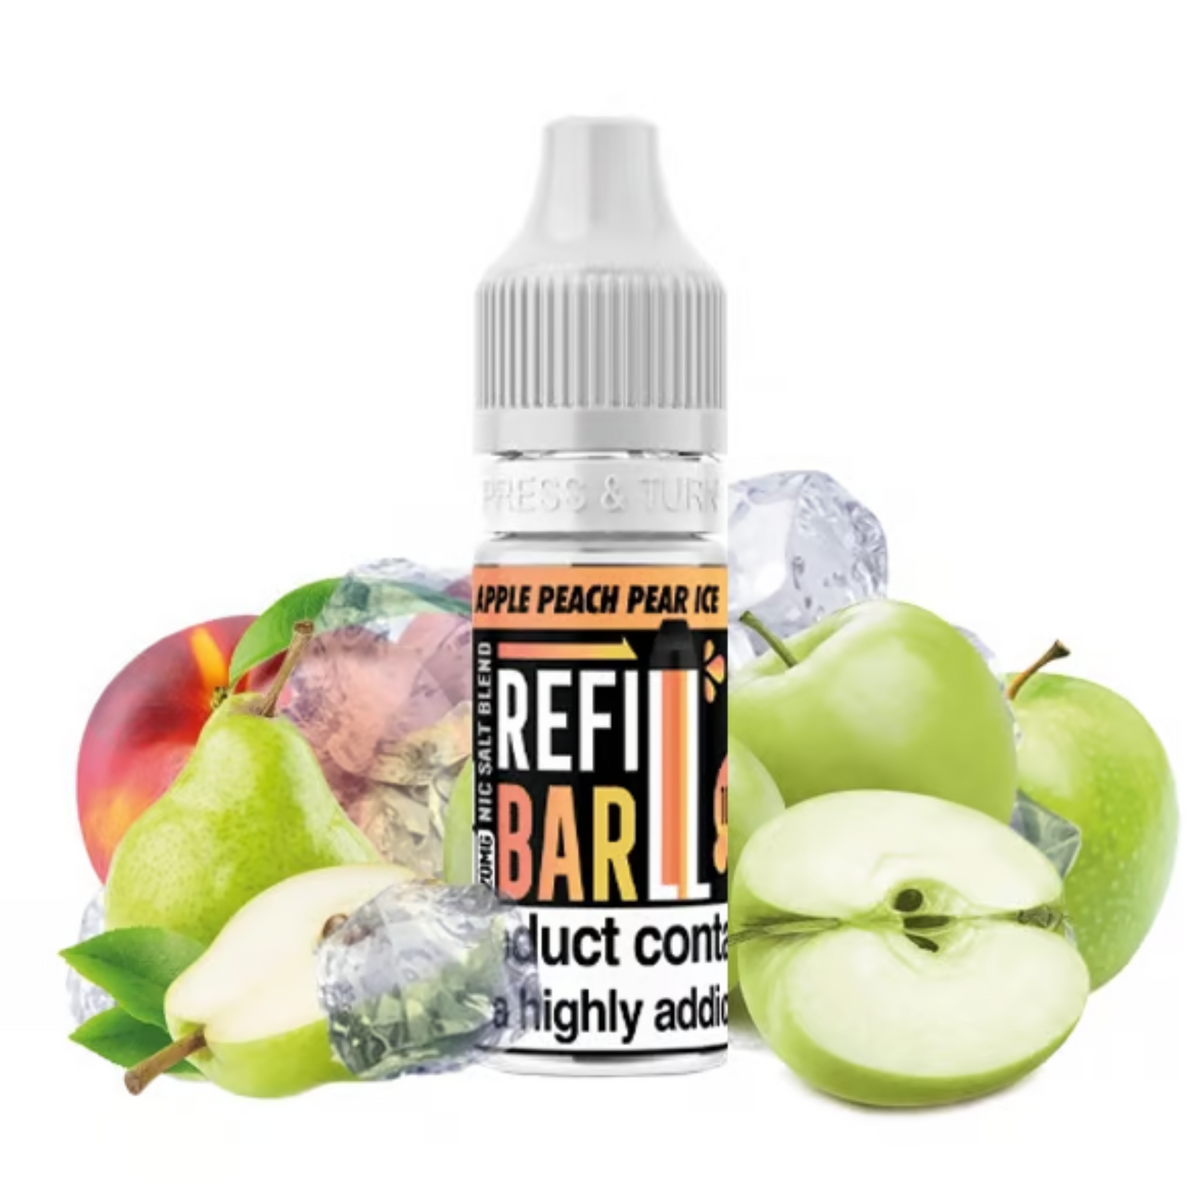 Refill Bar - Apple Peach Pear Ice 10ml